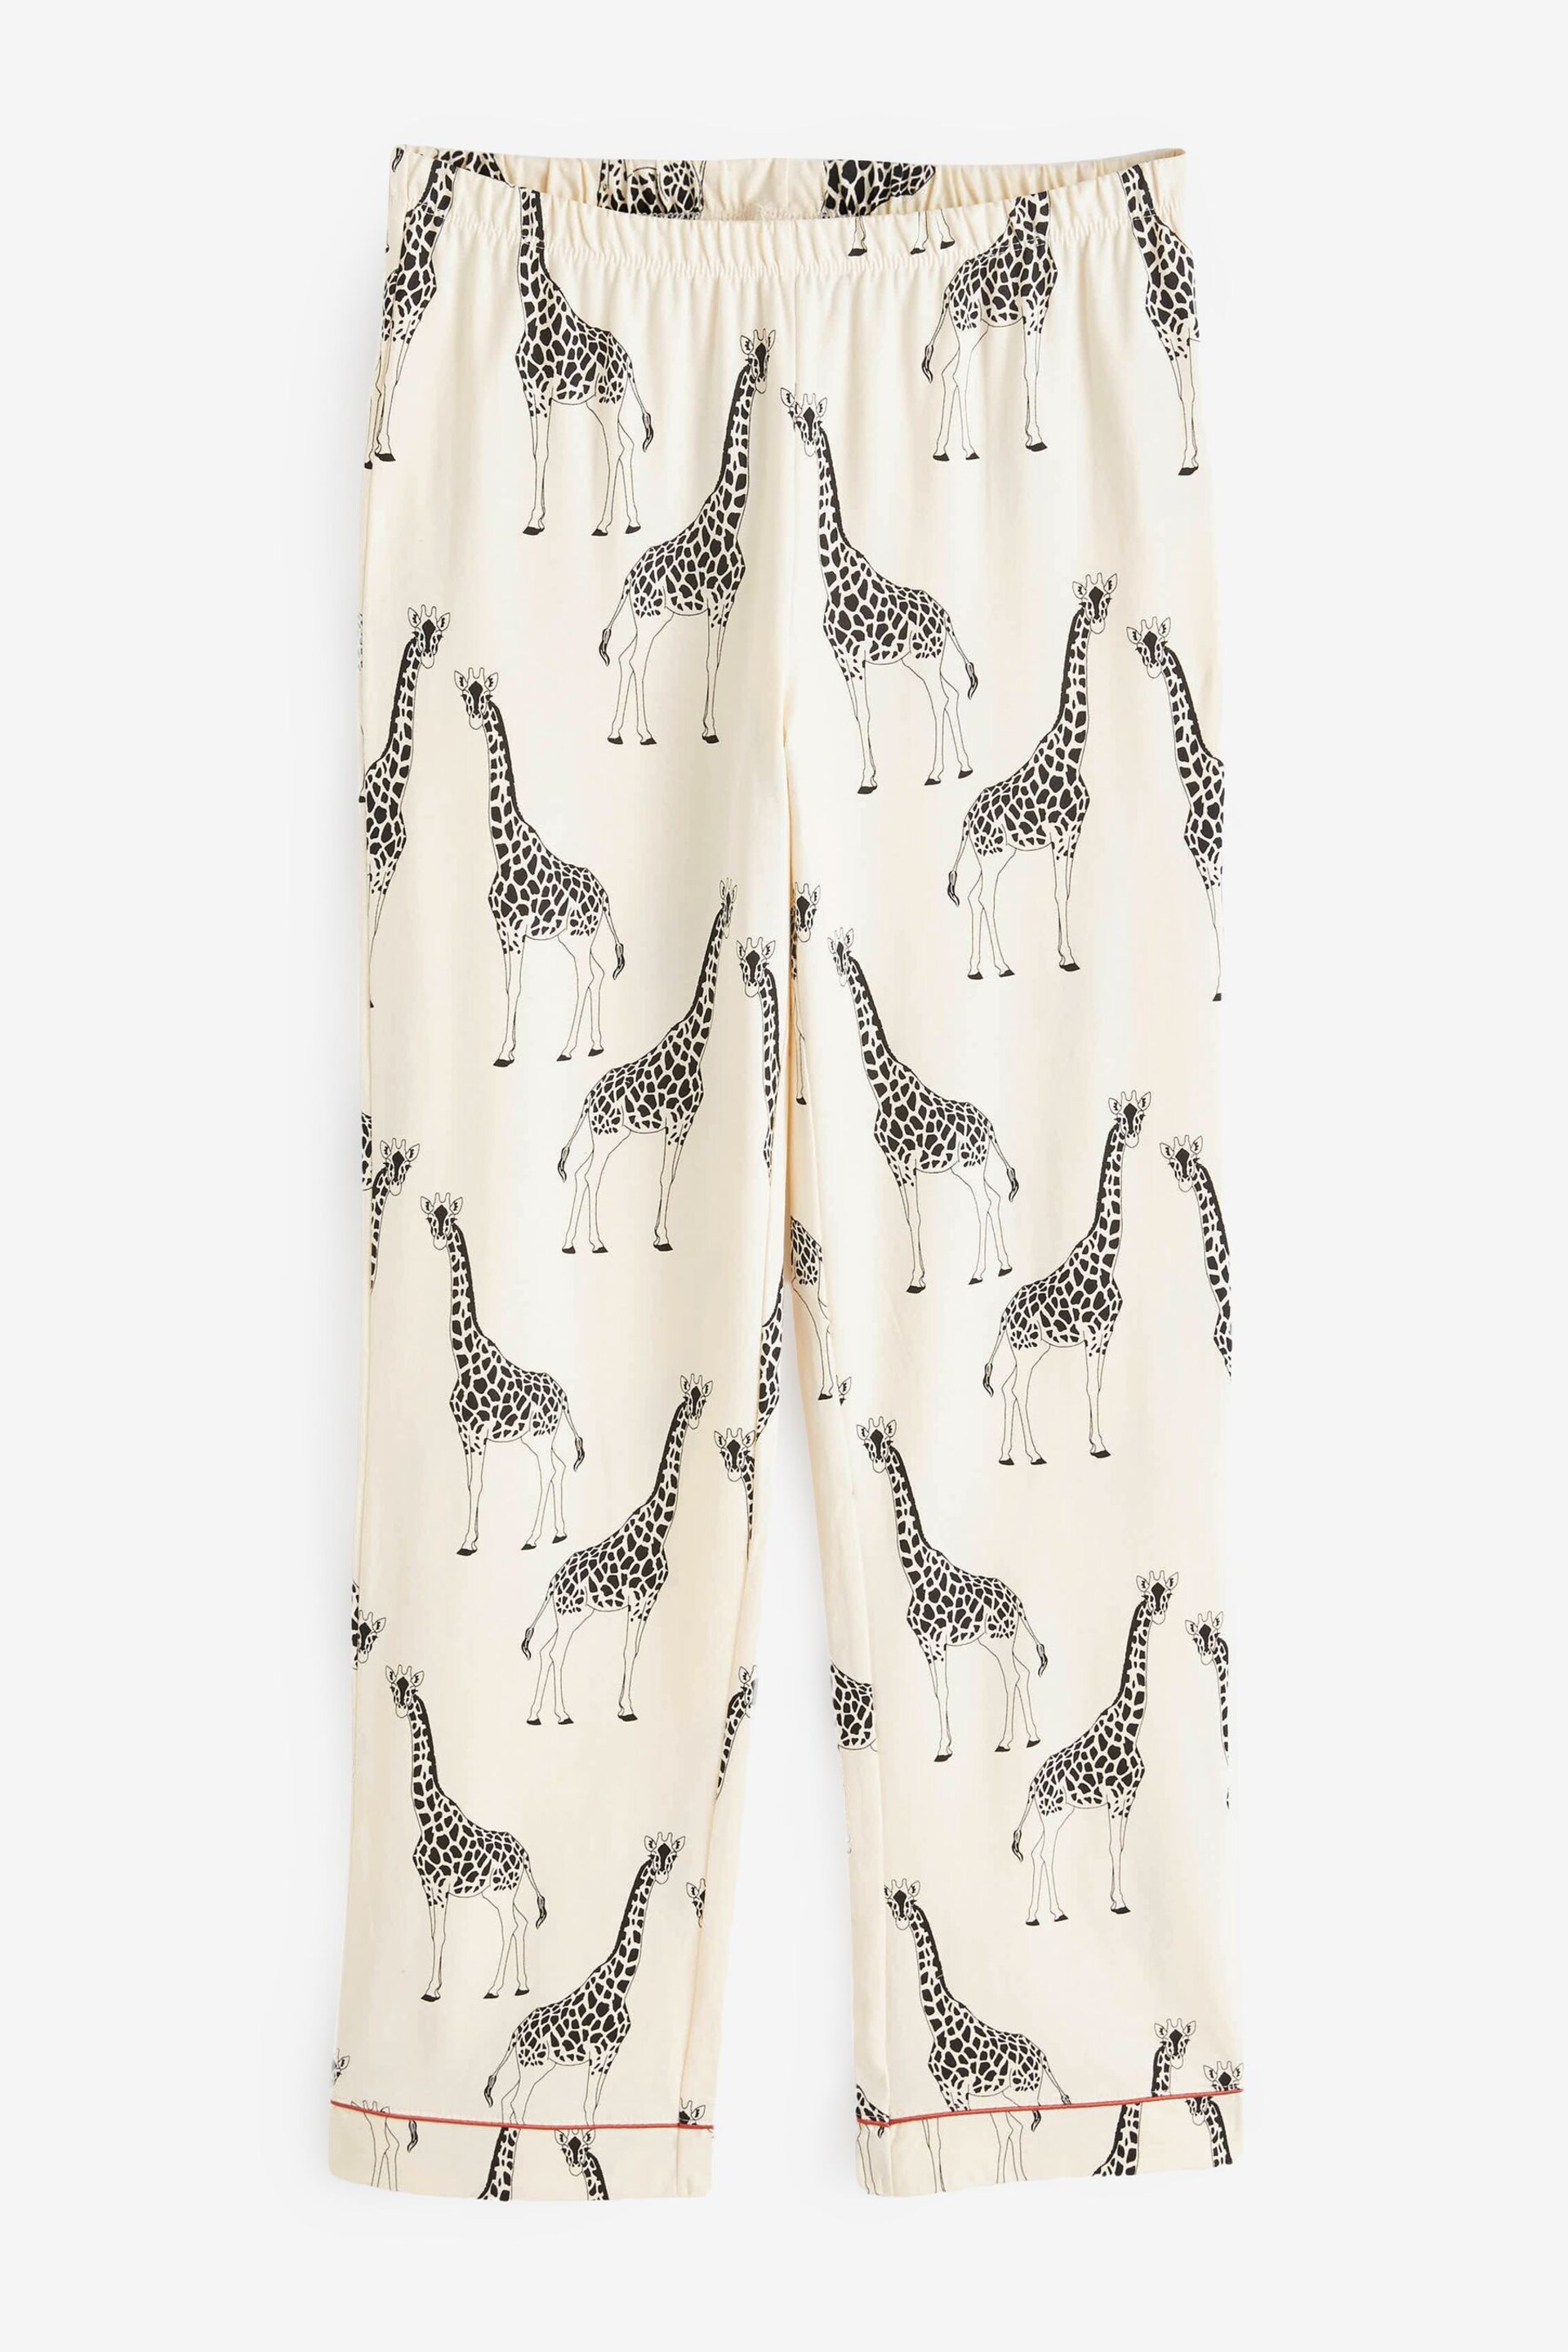 Chelsea Peers Cream Giraffe Button Up Long Pyjama Set - Image 9 of 9